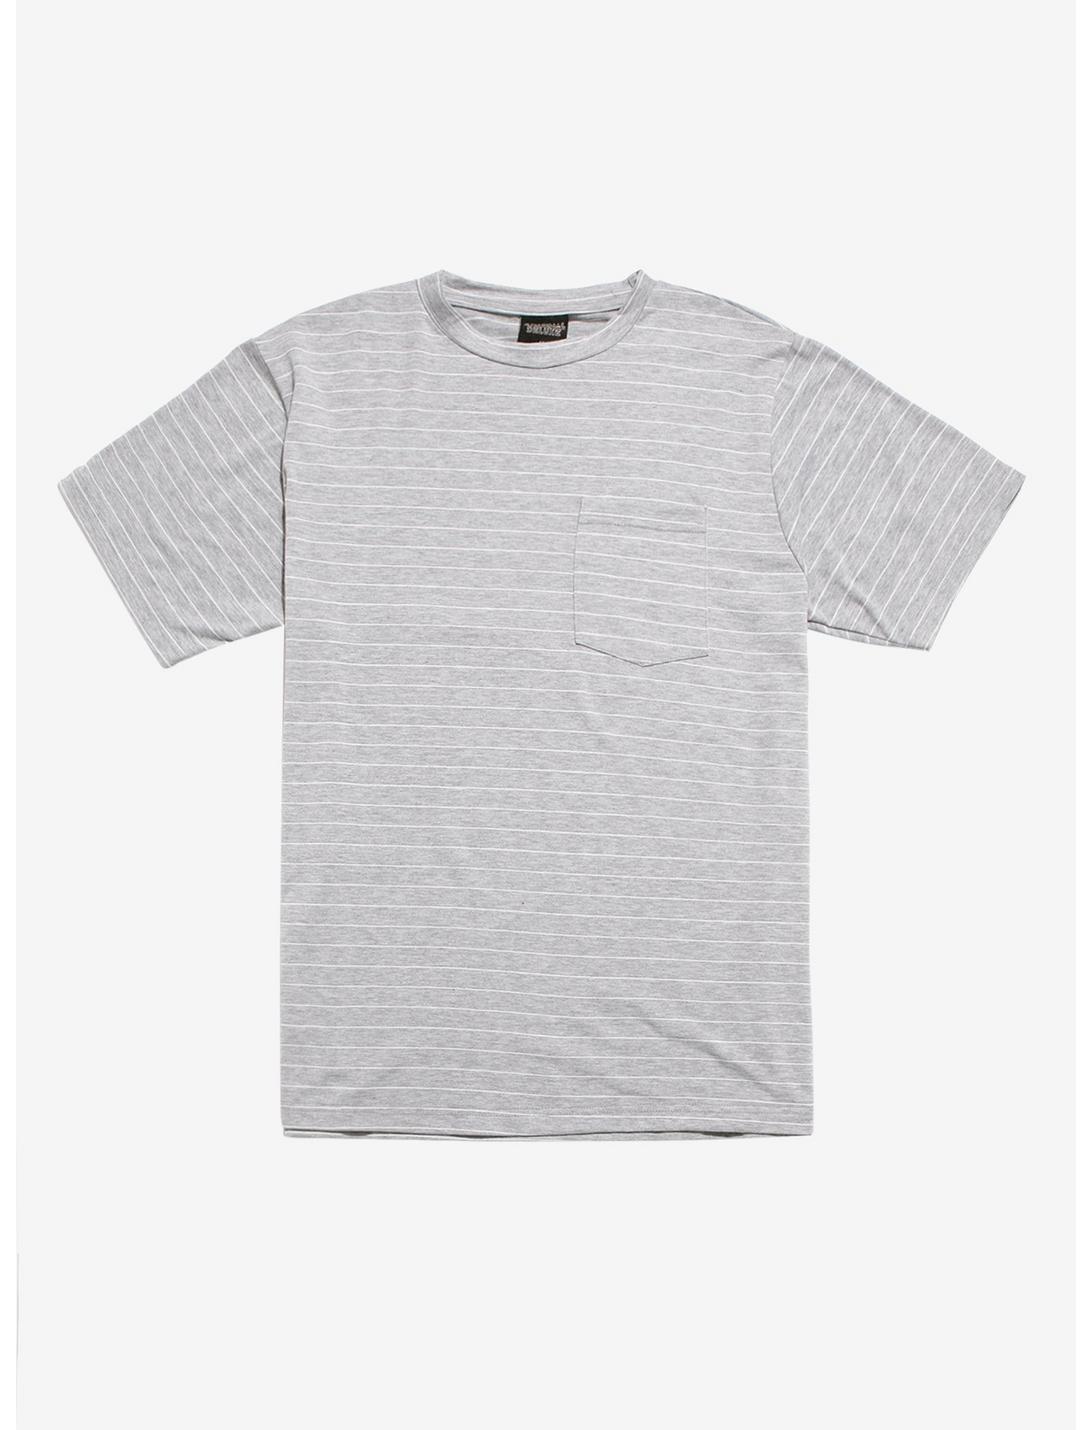 Grey & White Striped Pocket T-Shirt | Hot Topic